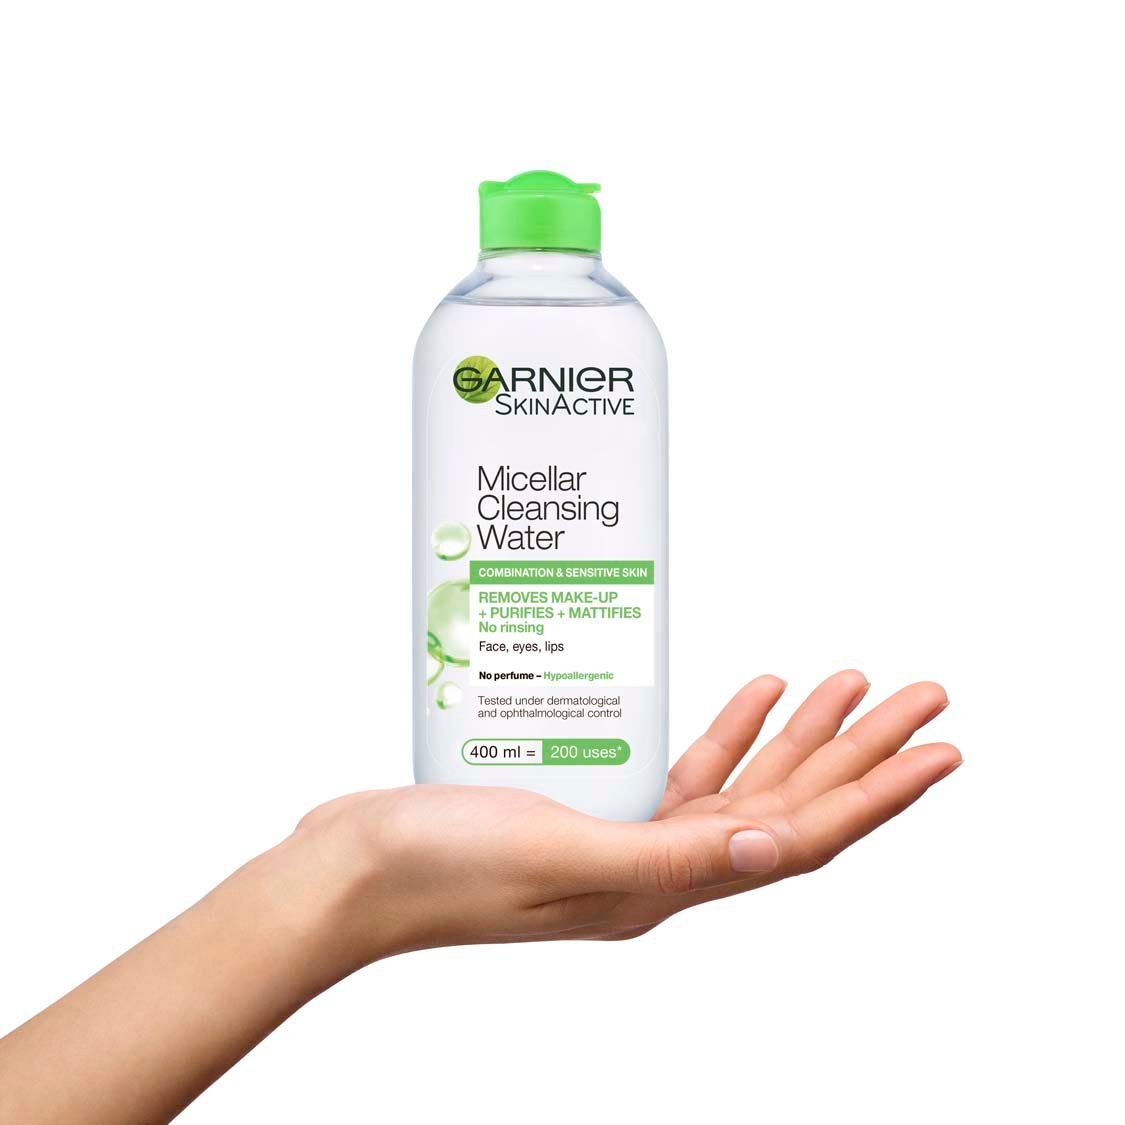 3600542263887 Garnier SkinActive Face Micellar Cleansing Water Combination Sensitive in hand